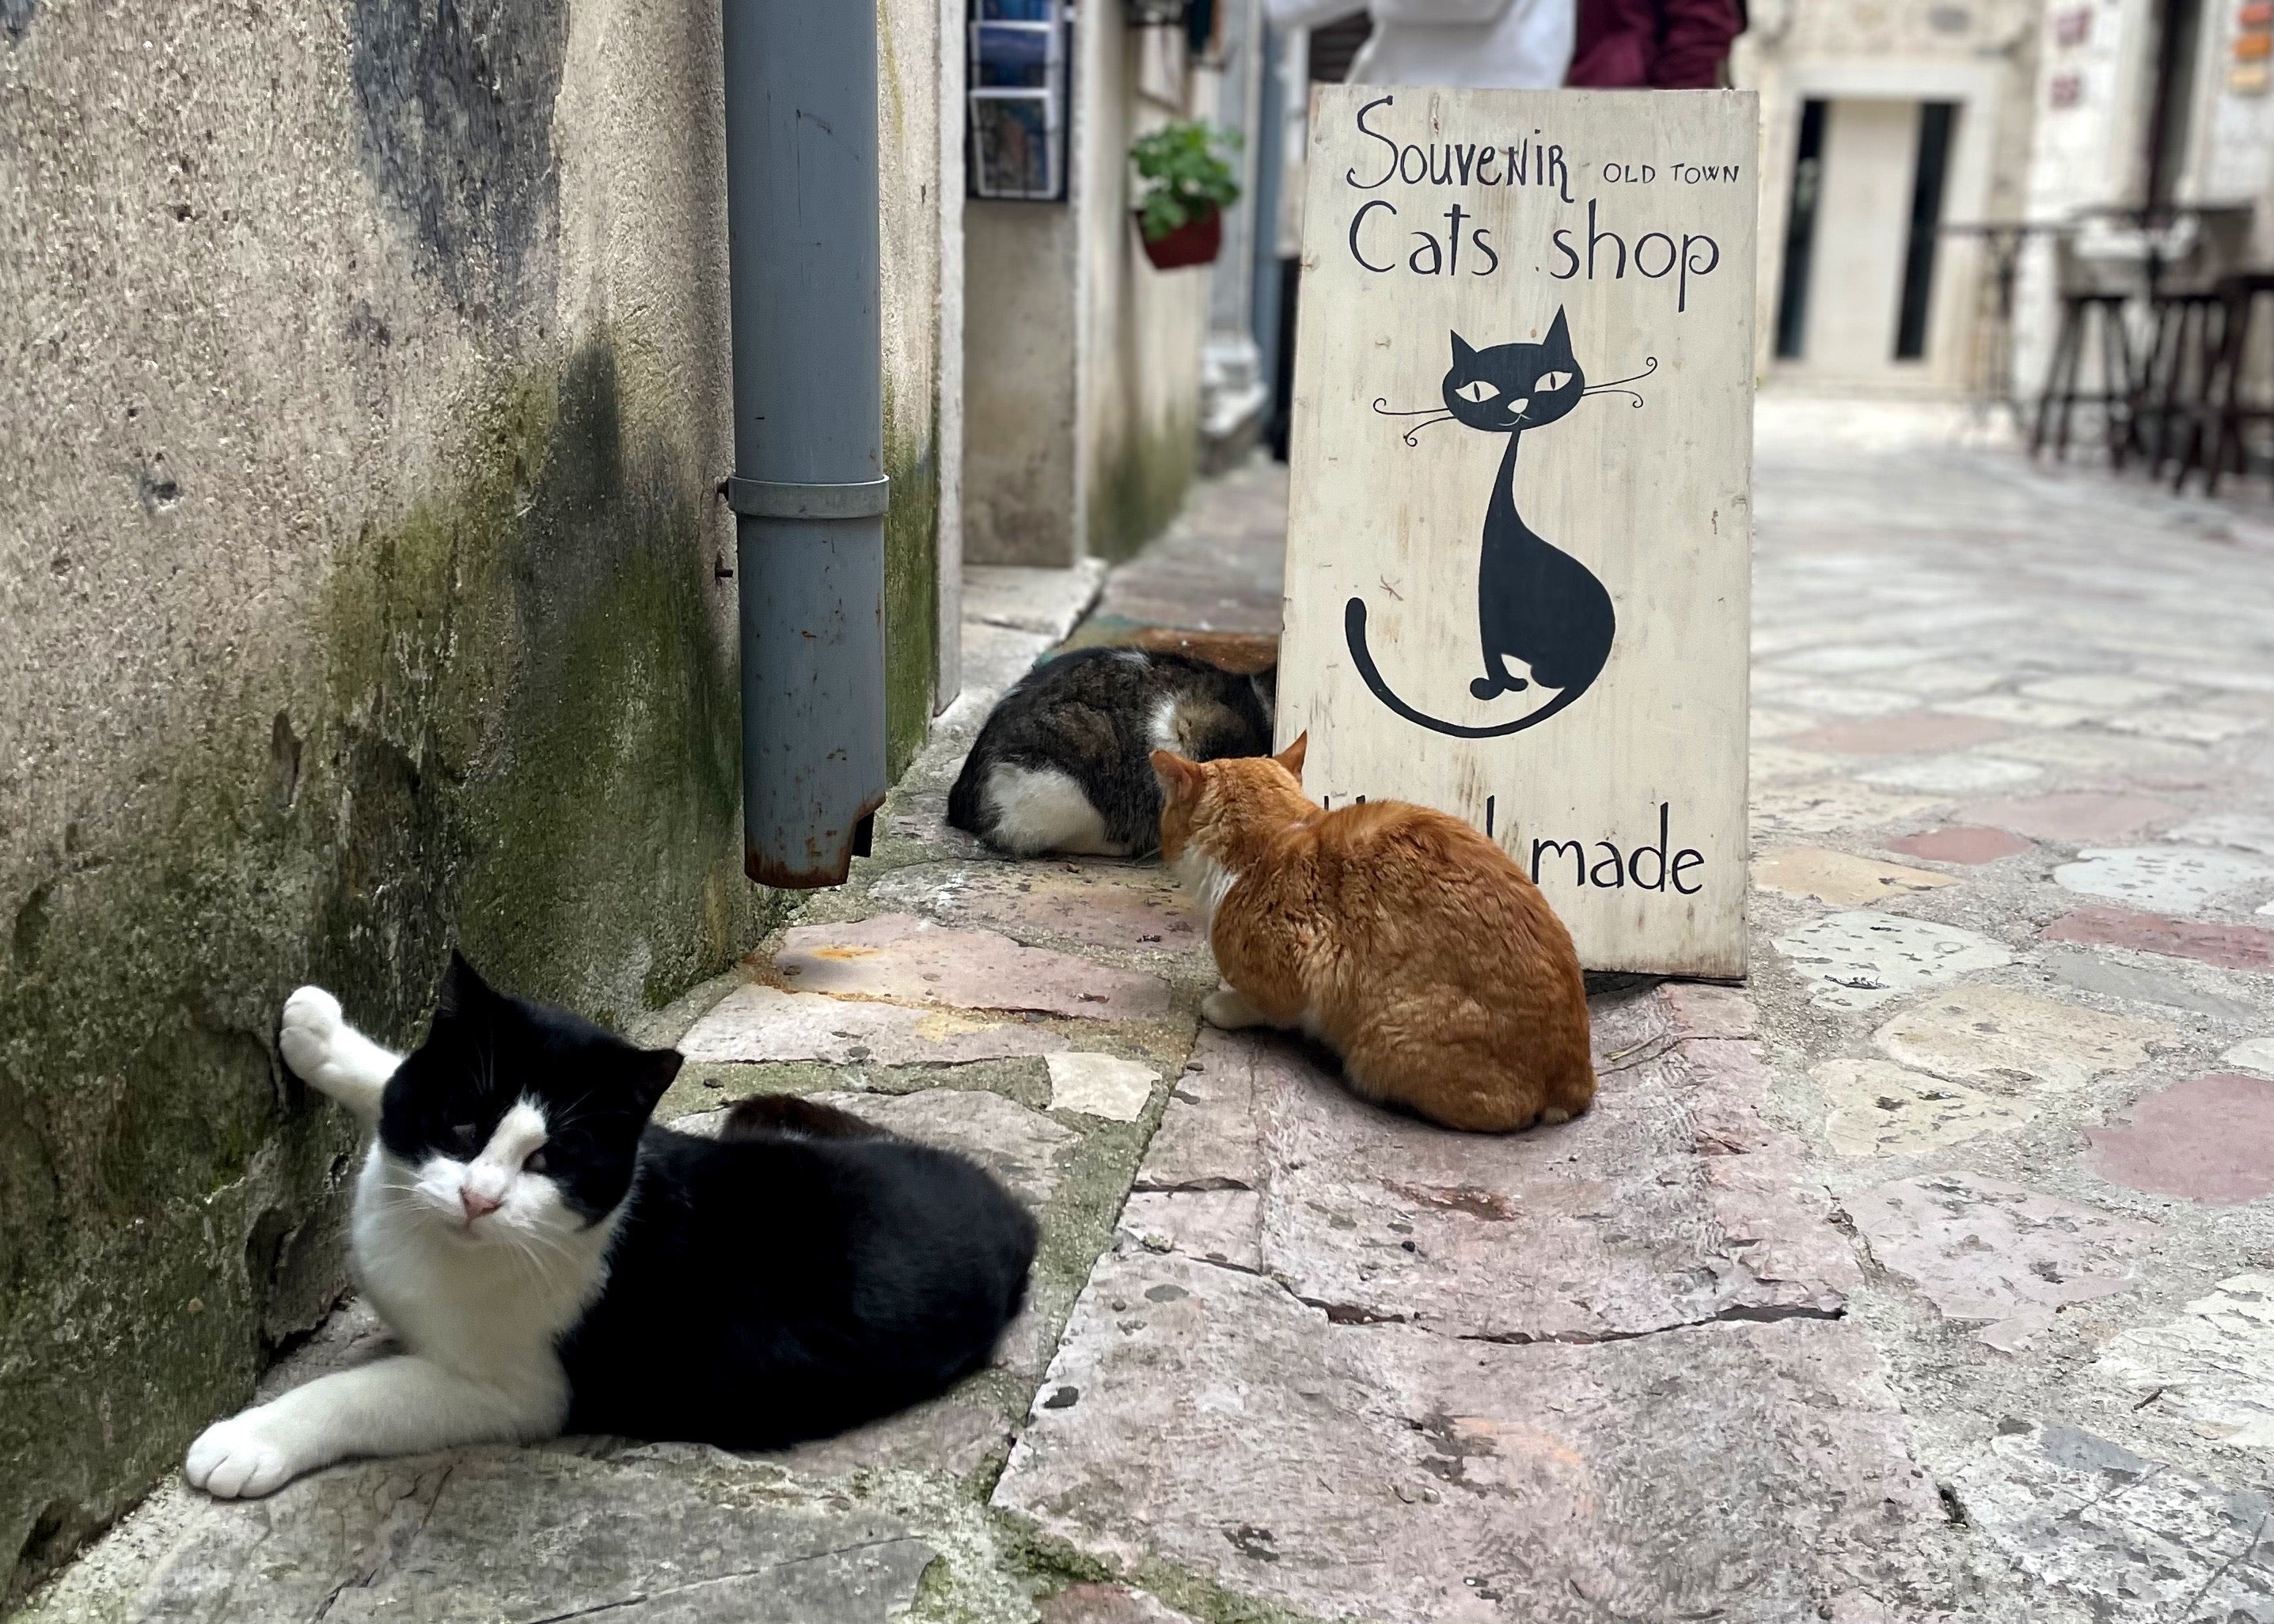 Cat souvenir shops have sprung up around town